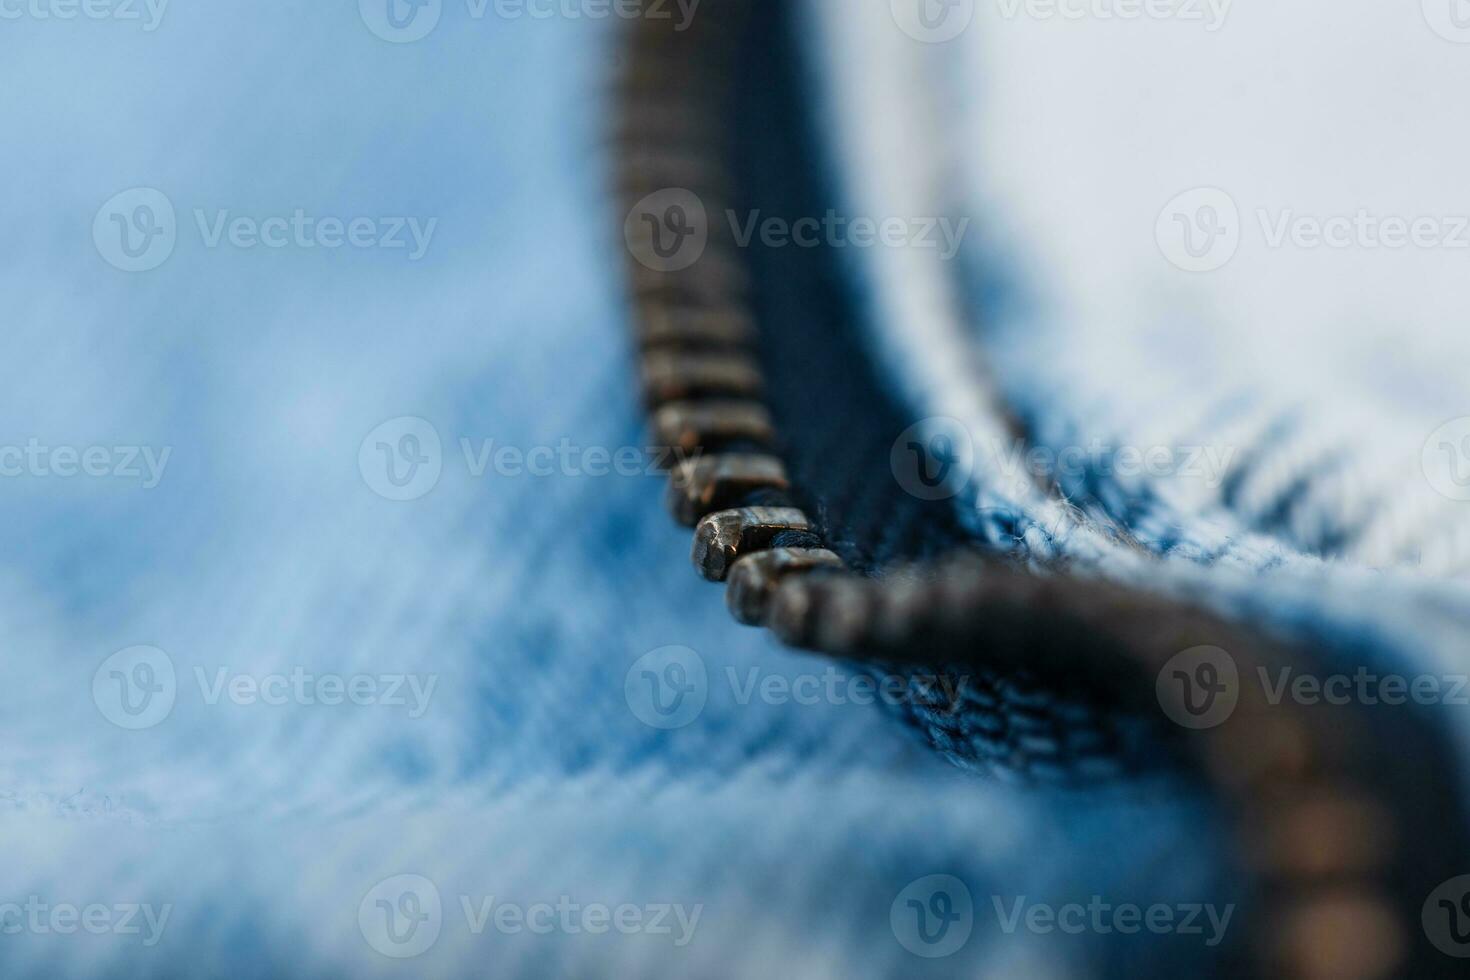 metall dragkedja och blå jeans textur, makro. mode denim foto